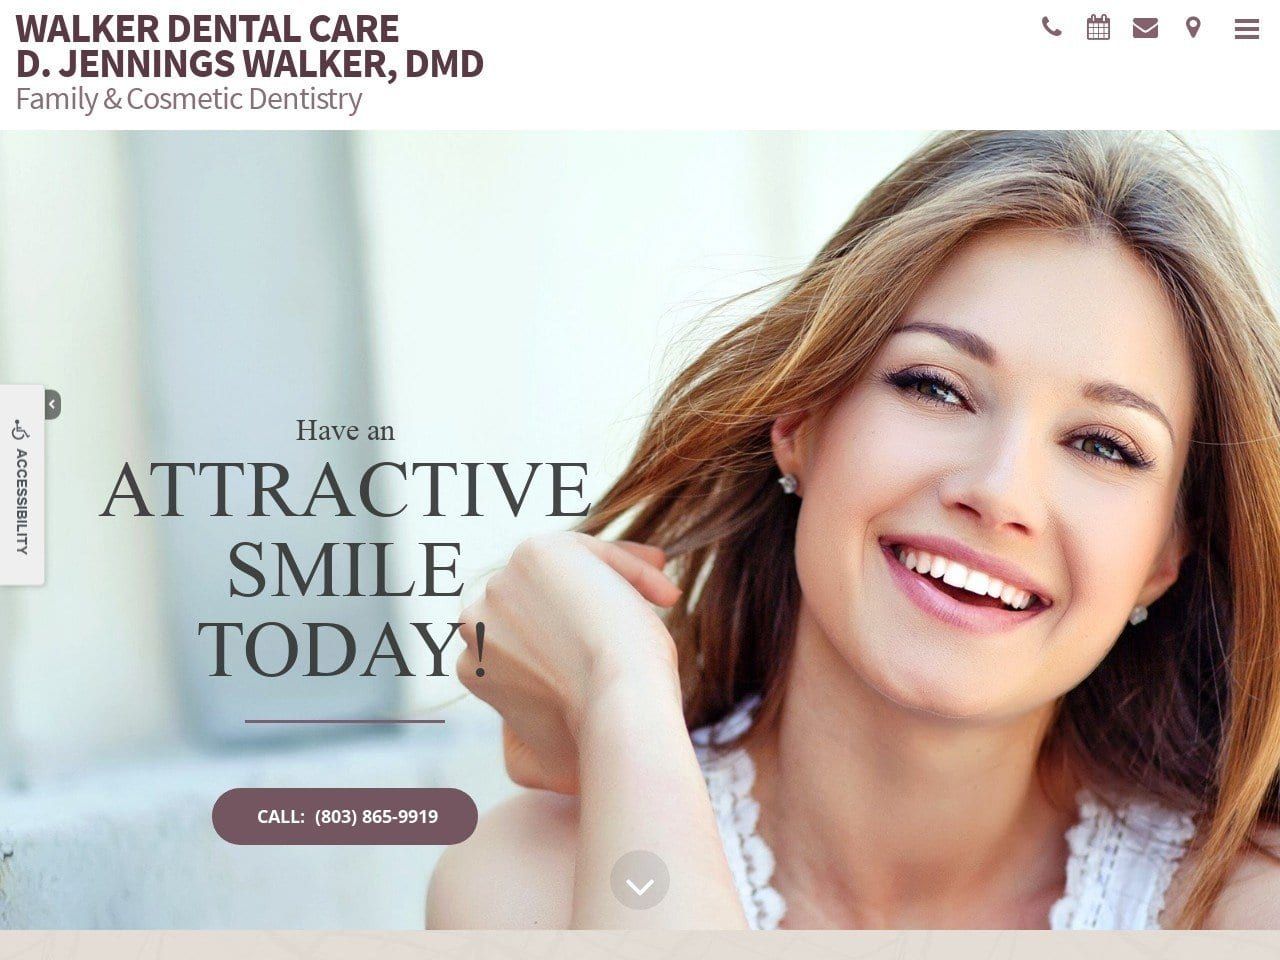 Walker Dental Care Website Screenshot from walkerdentalcare.com